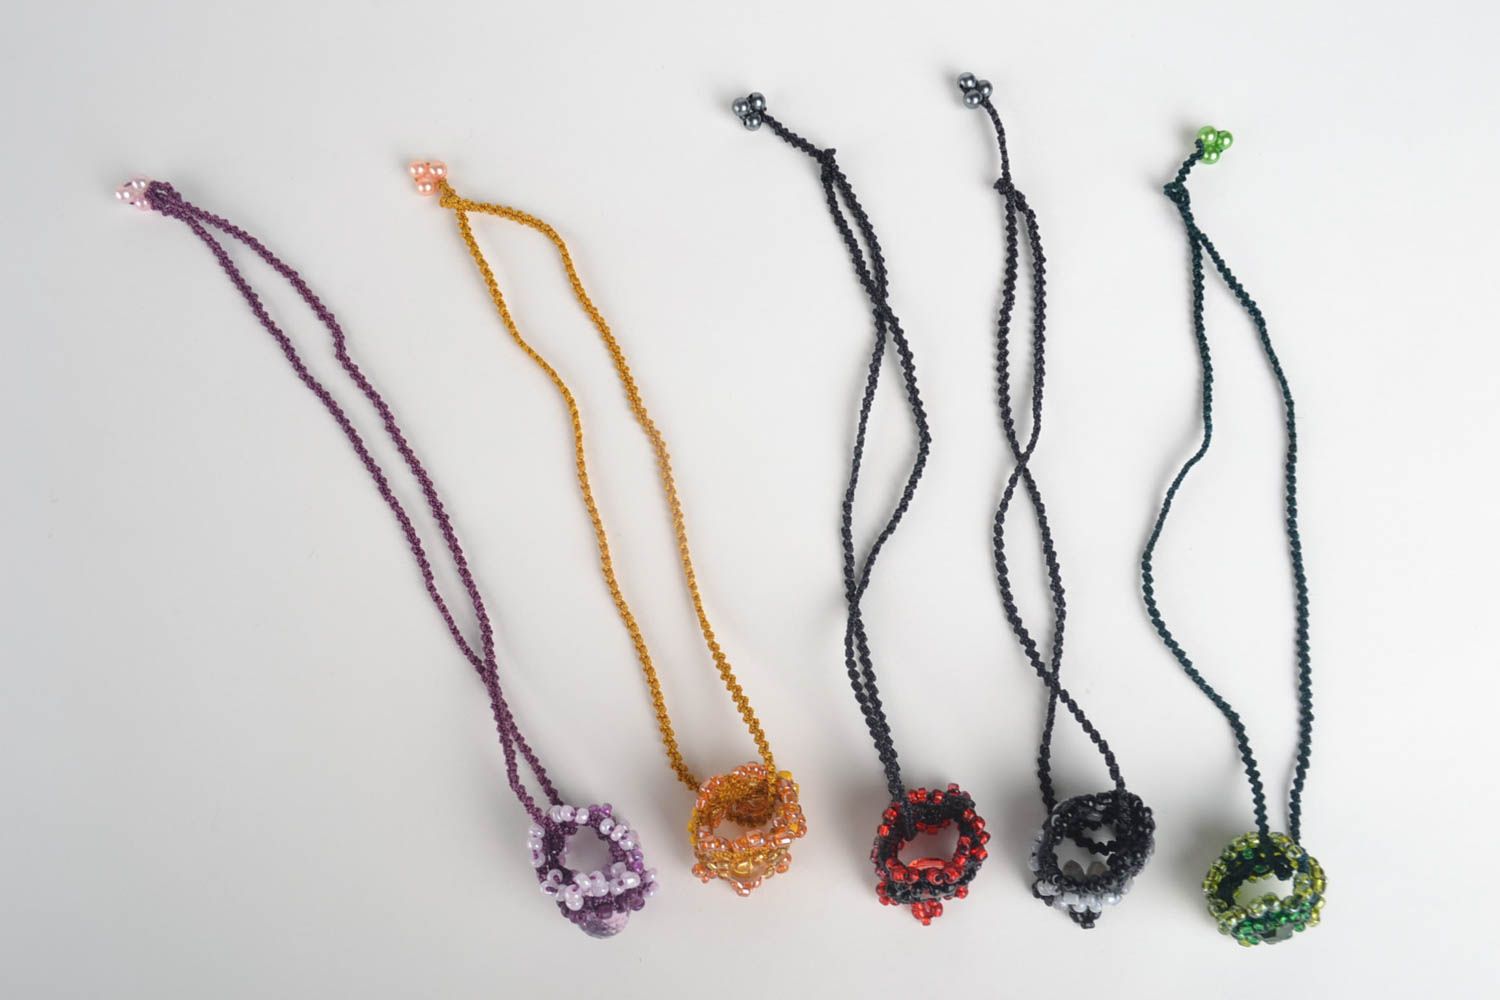 Handmade pendant designer pendant beads pendant macrame pendant set of 5 items photo 2